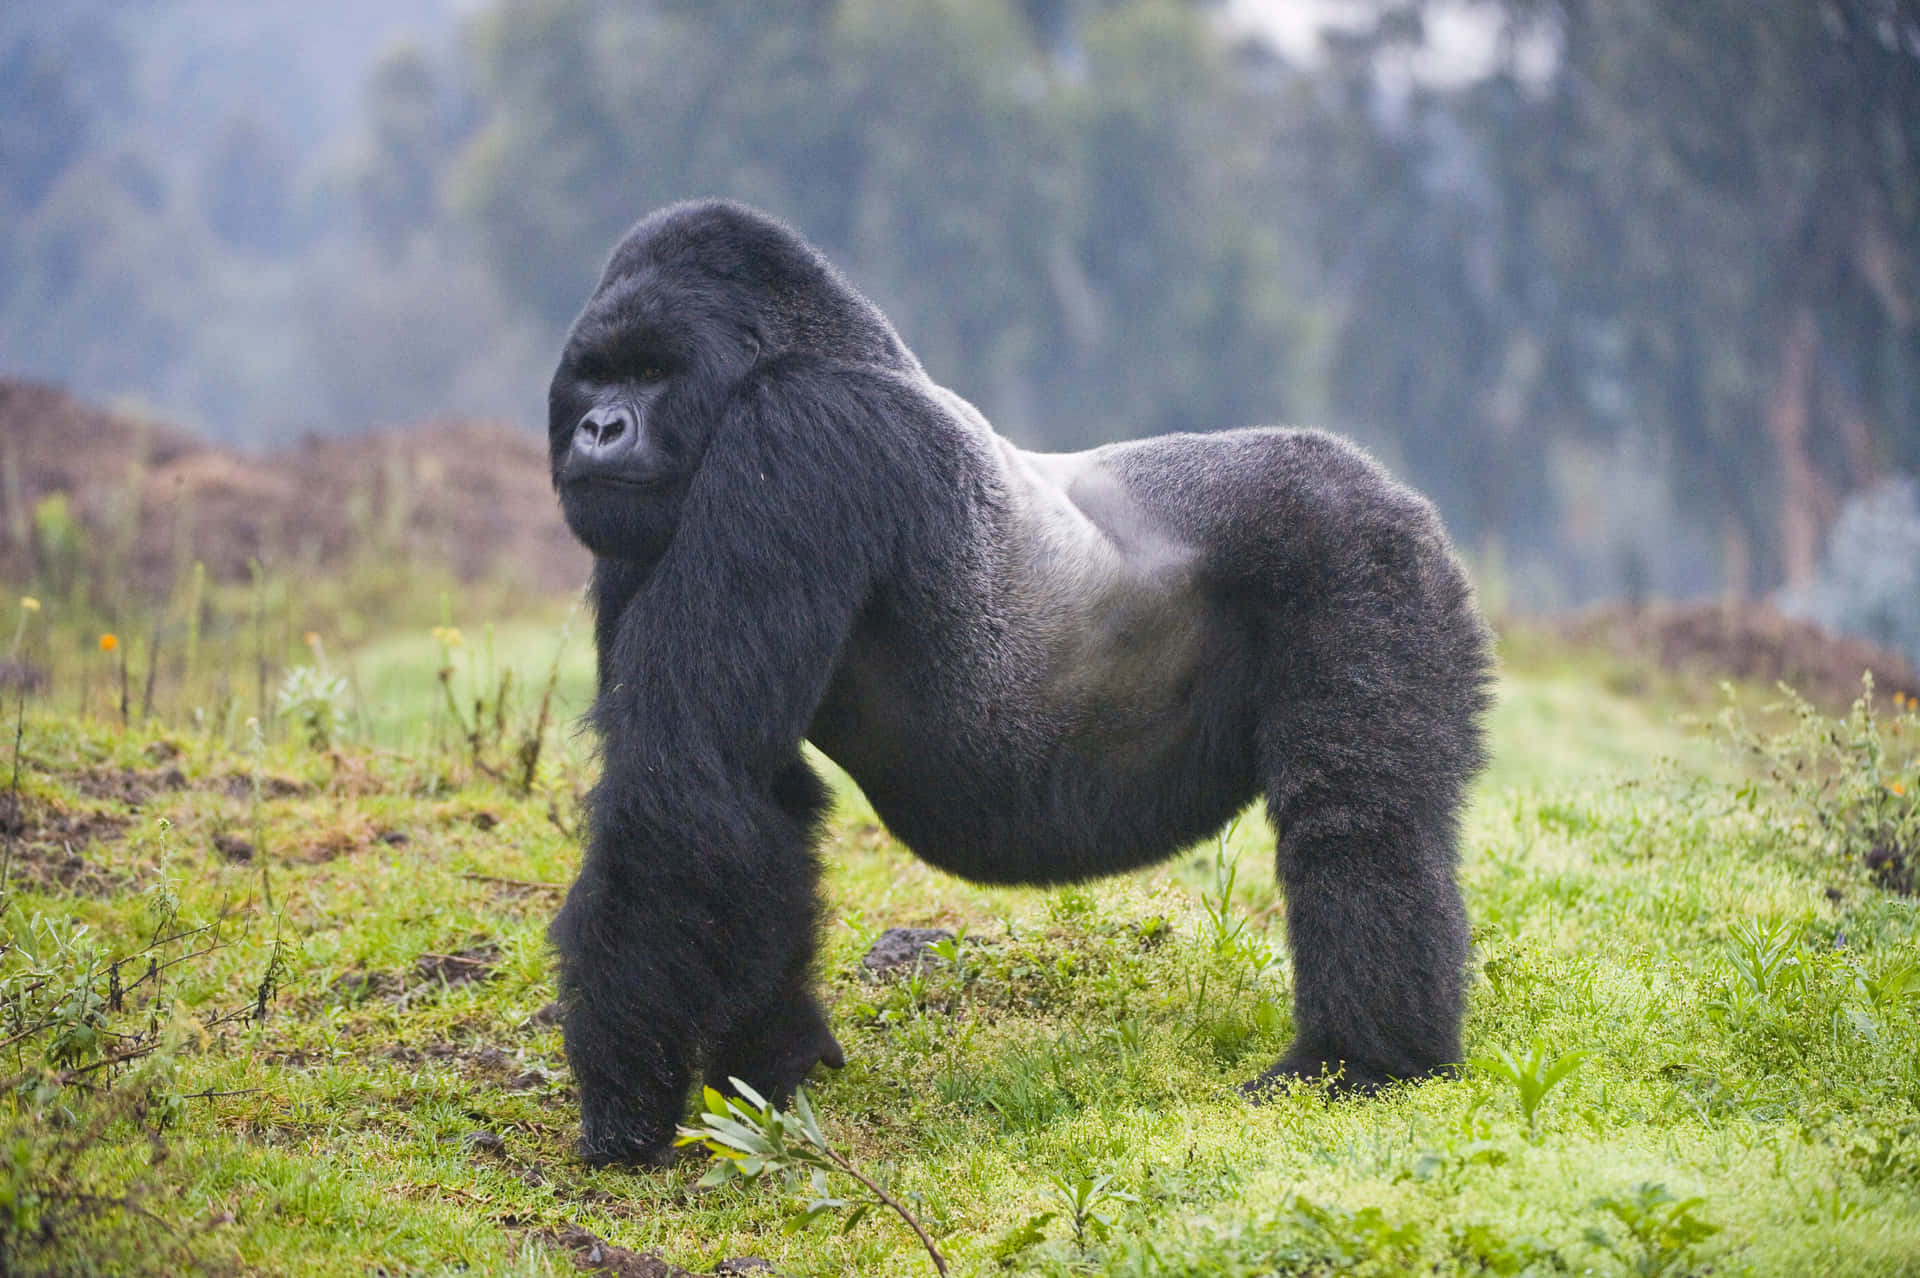 a gorilla standing on a green field